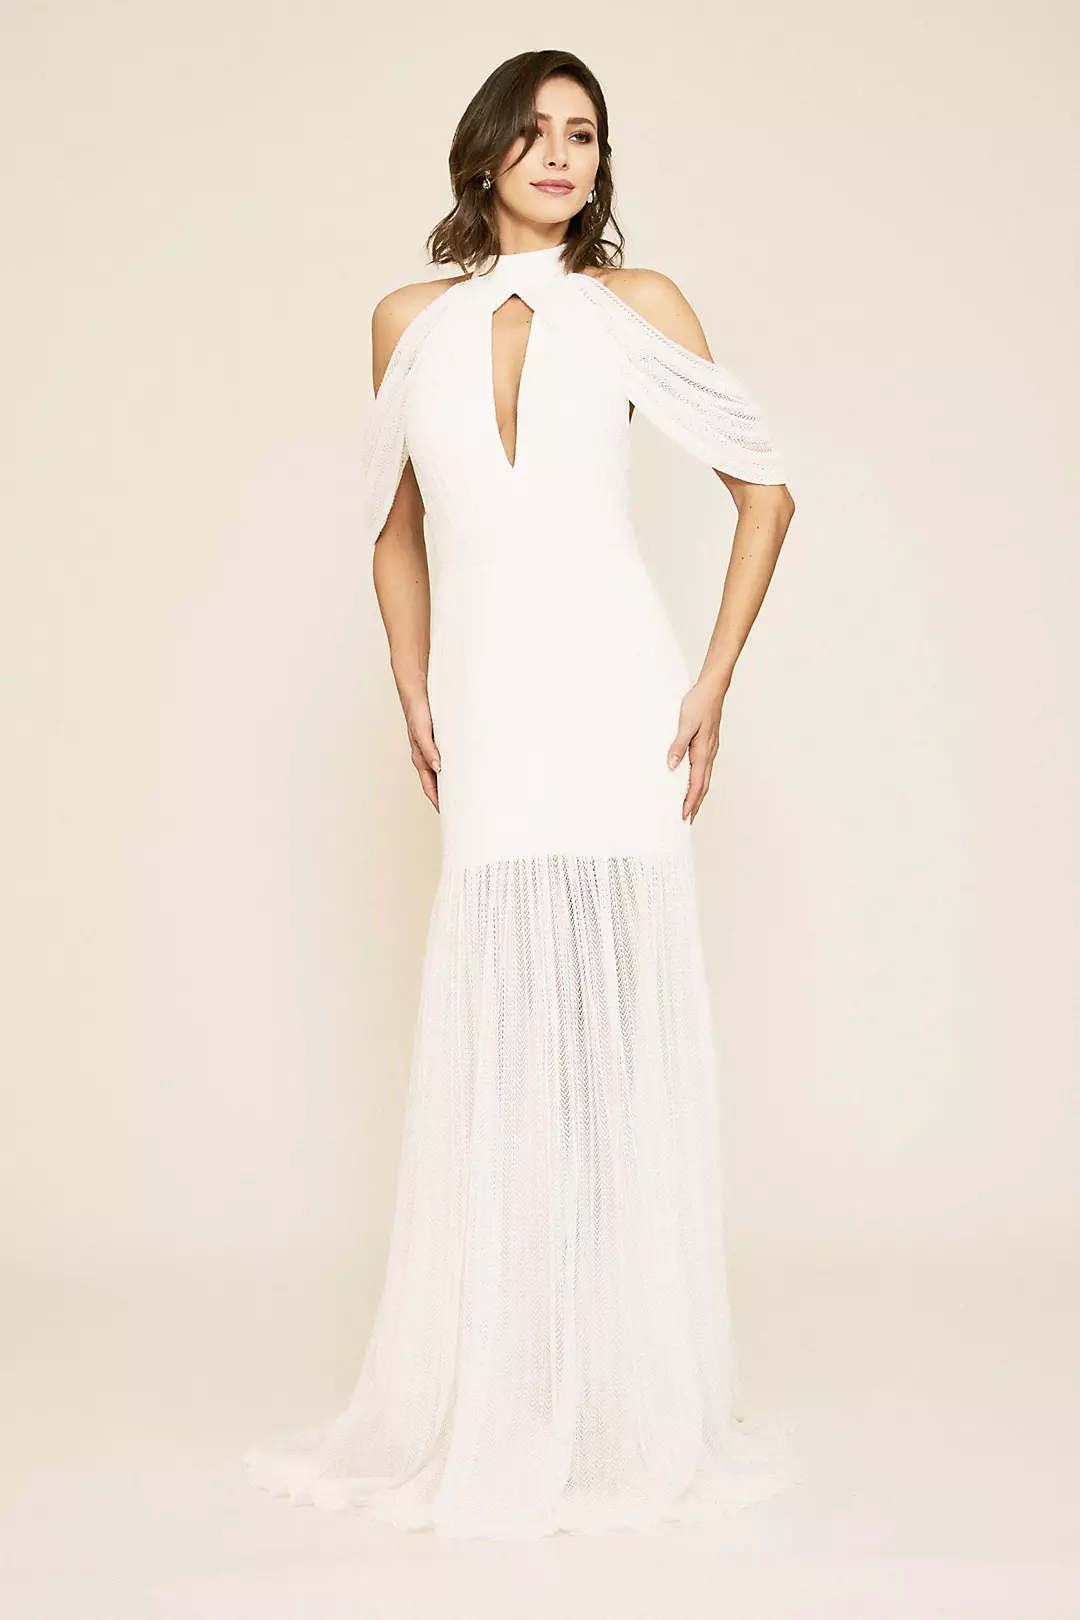 Cold Shoulder Crochet Lace Sheath Wedding Dress Image